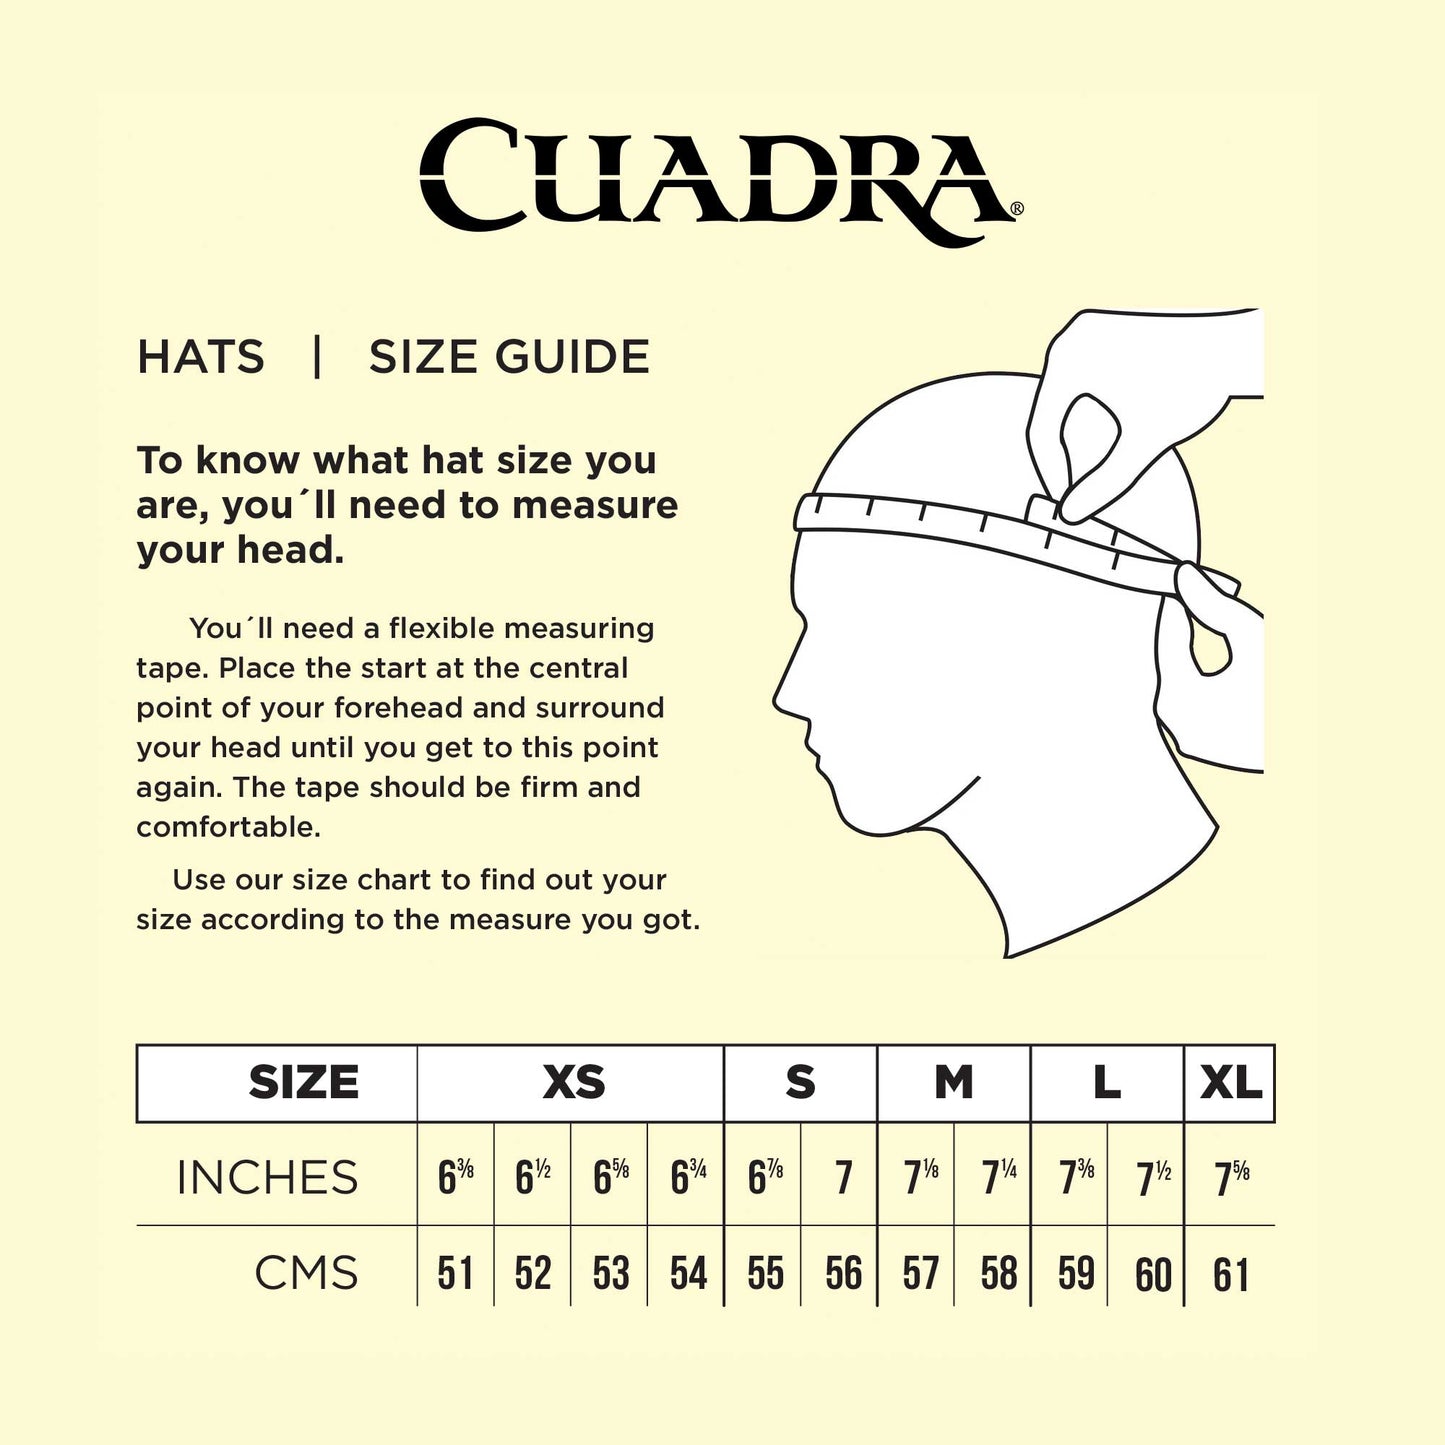 Cuadra's Hat SizeGuide